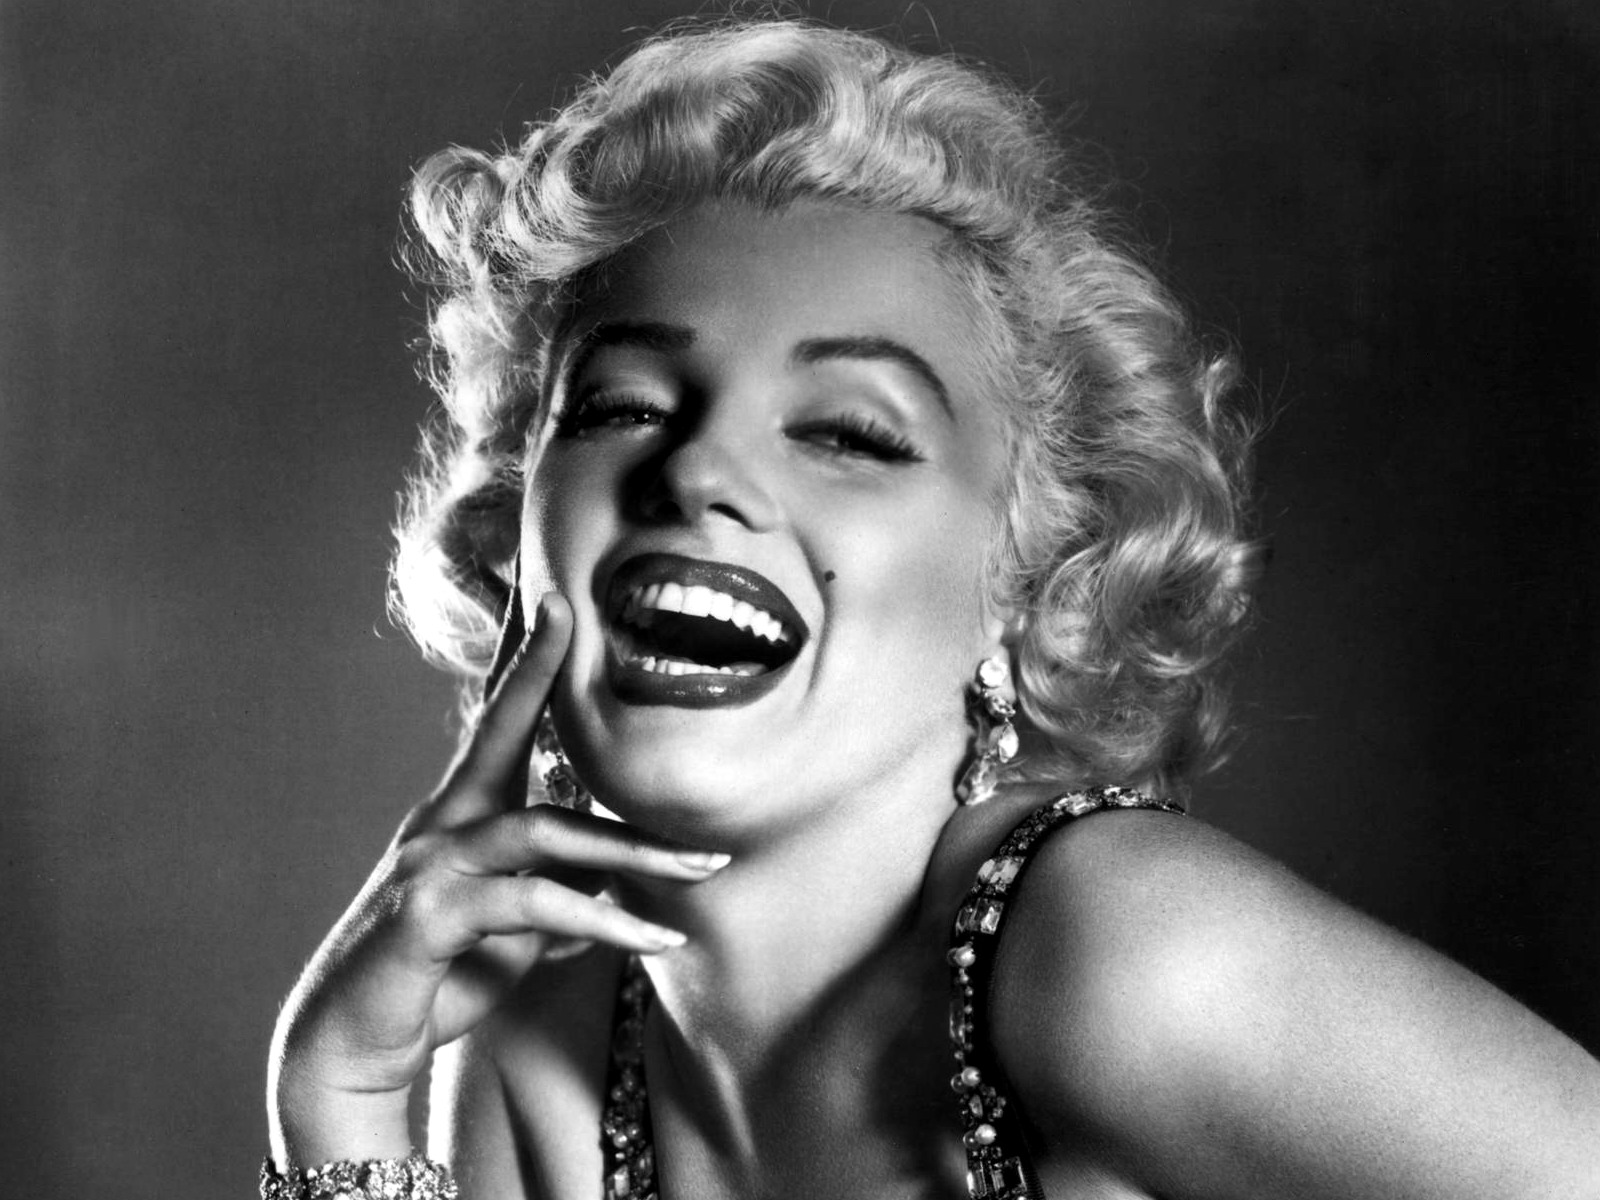 http://3.bp.blogspot.com/-eXLQ10wHe9Q/UB-QboRckpI/AAAAAAAAB7U/Nd1g2Bi8n4I/s1600/Marilyn-Monroe2.jpg